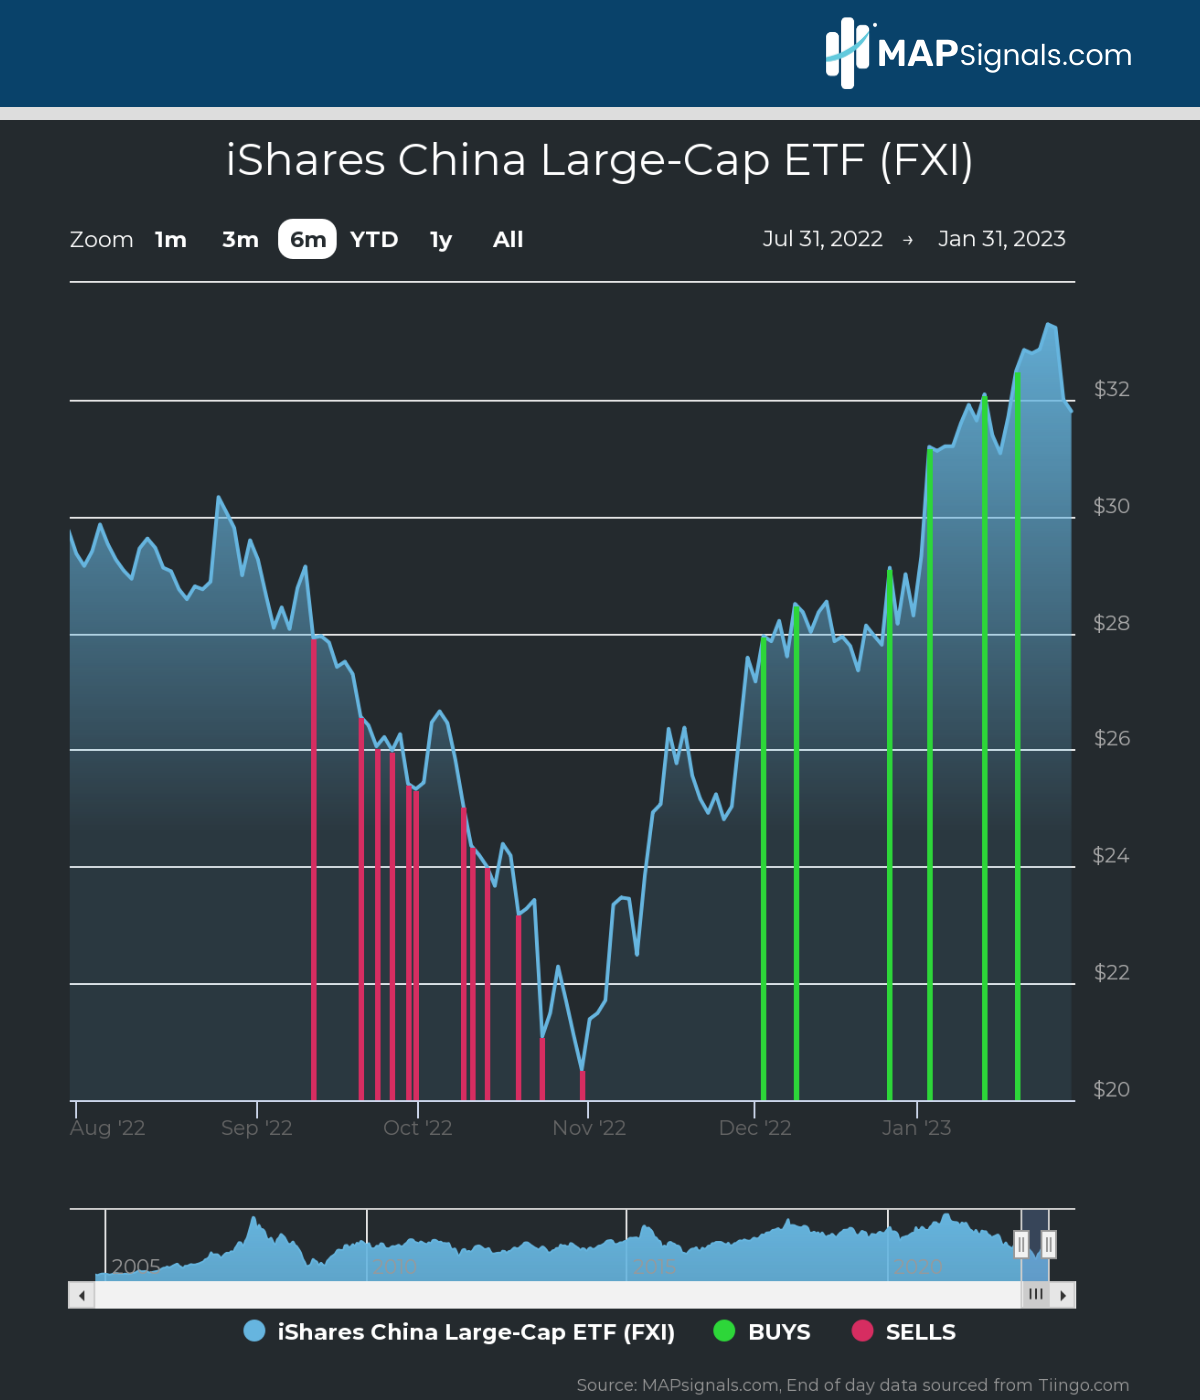 iShares China Large-Cap ETF (FXI) | MAPsignals